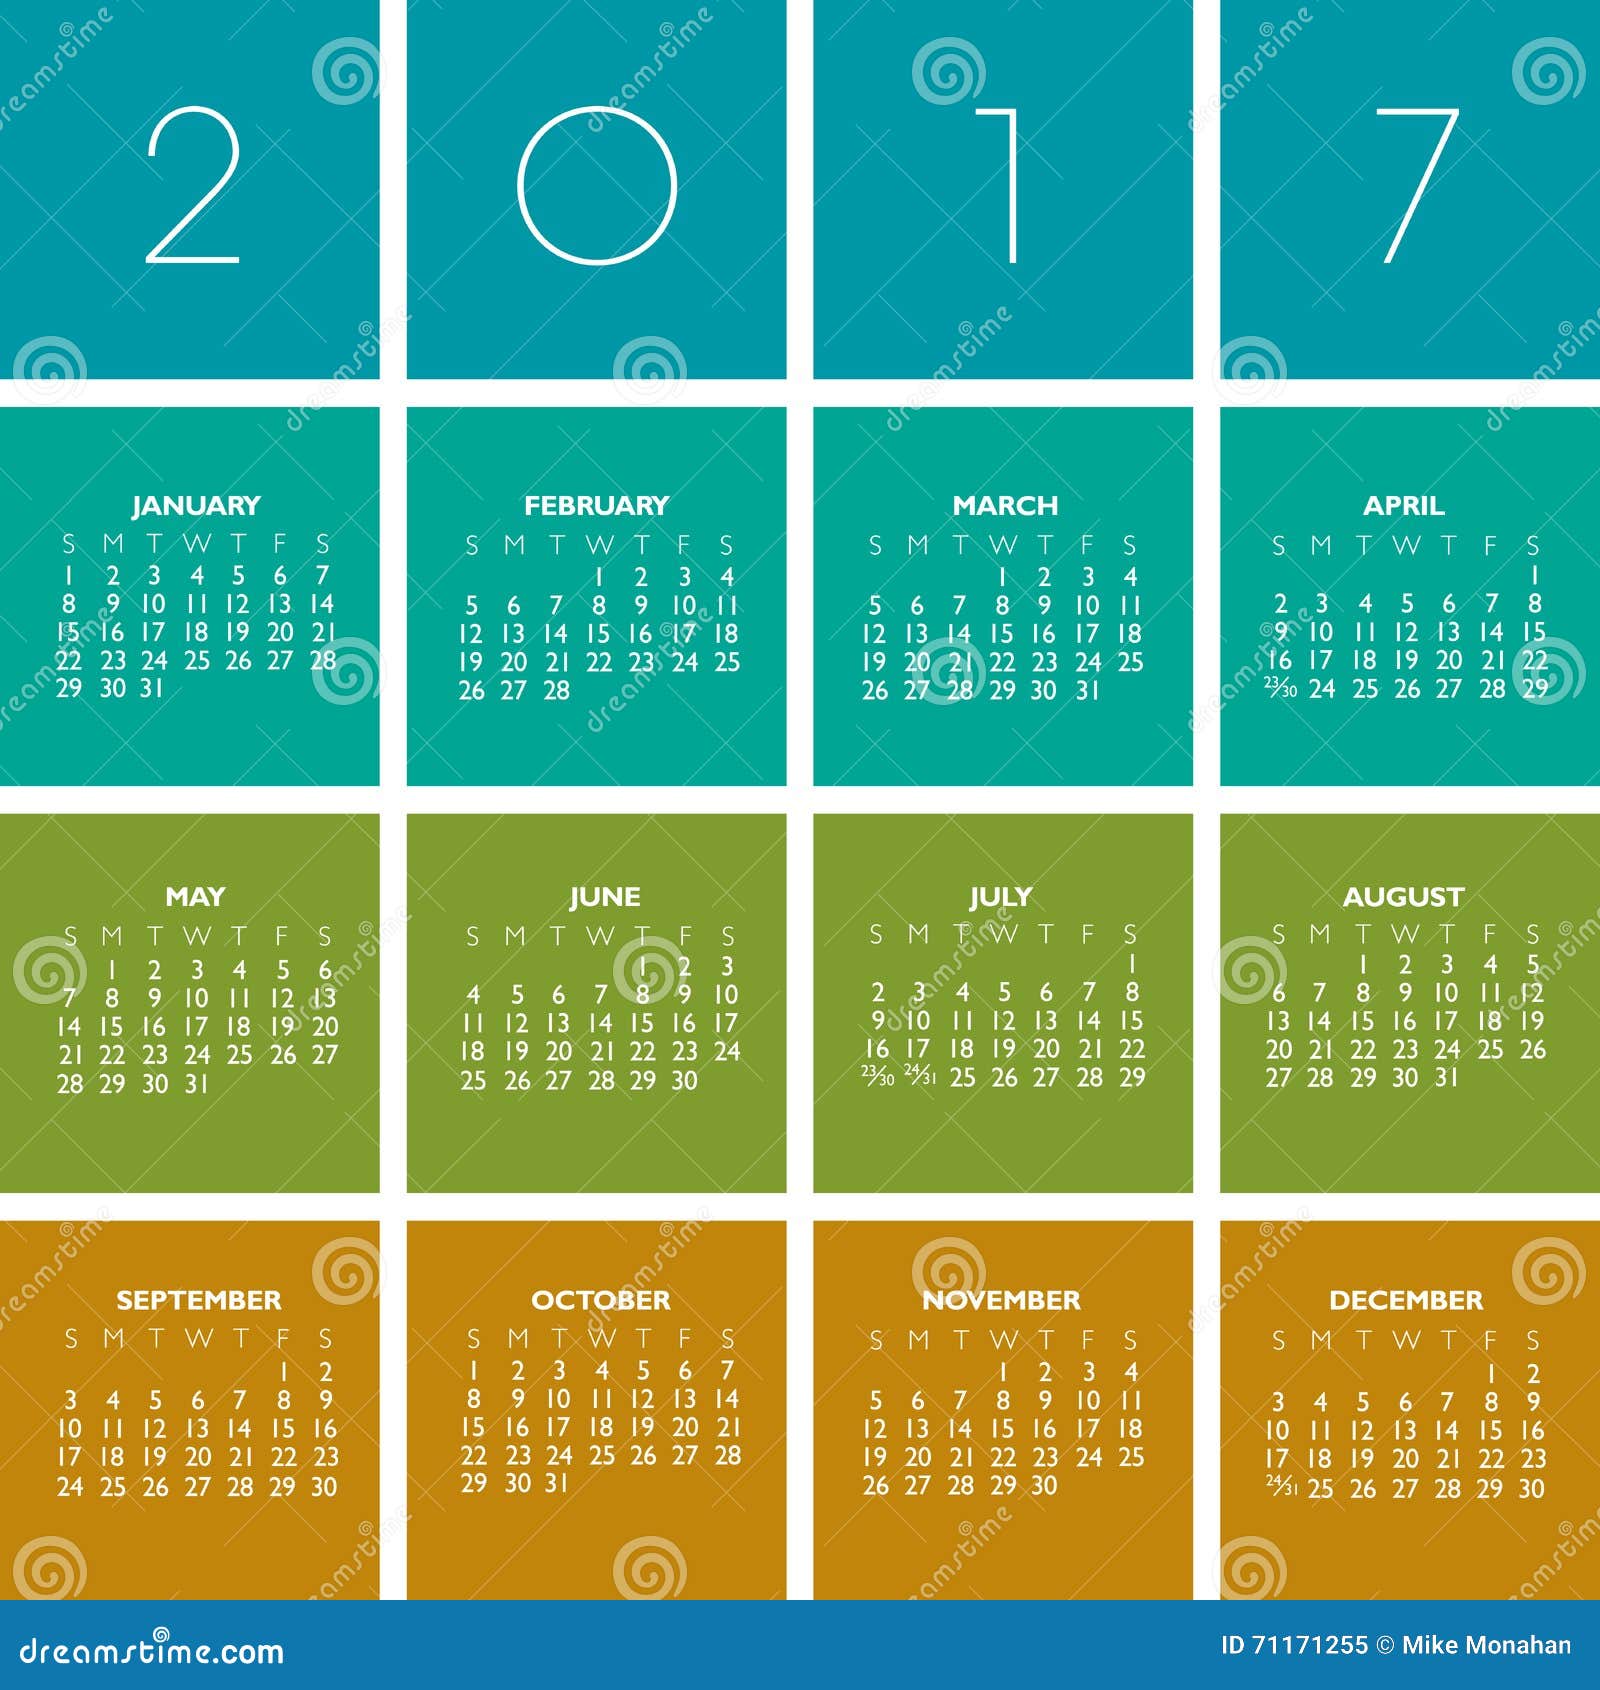 2017 Creative Colorful Calendar Stock Vector - Image: 71171255